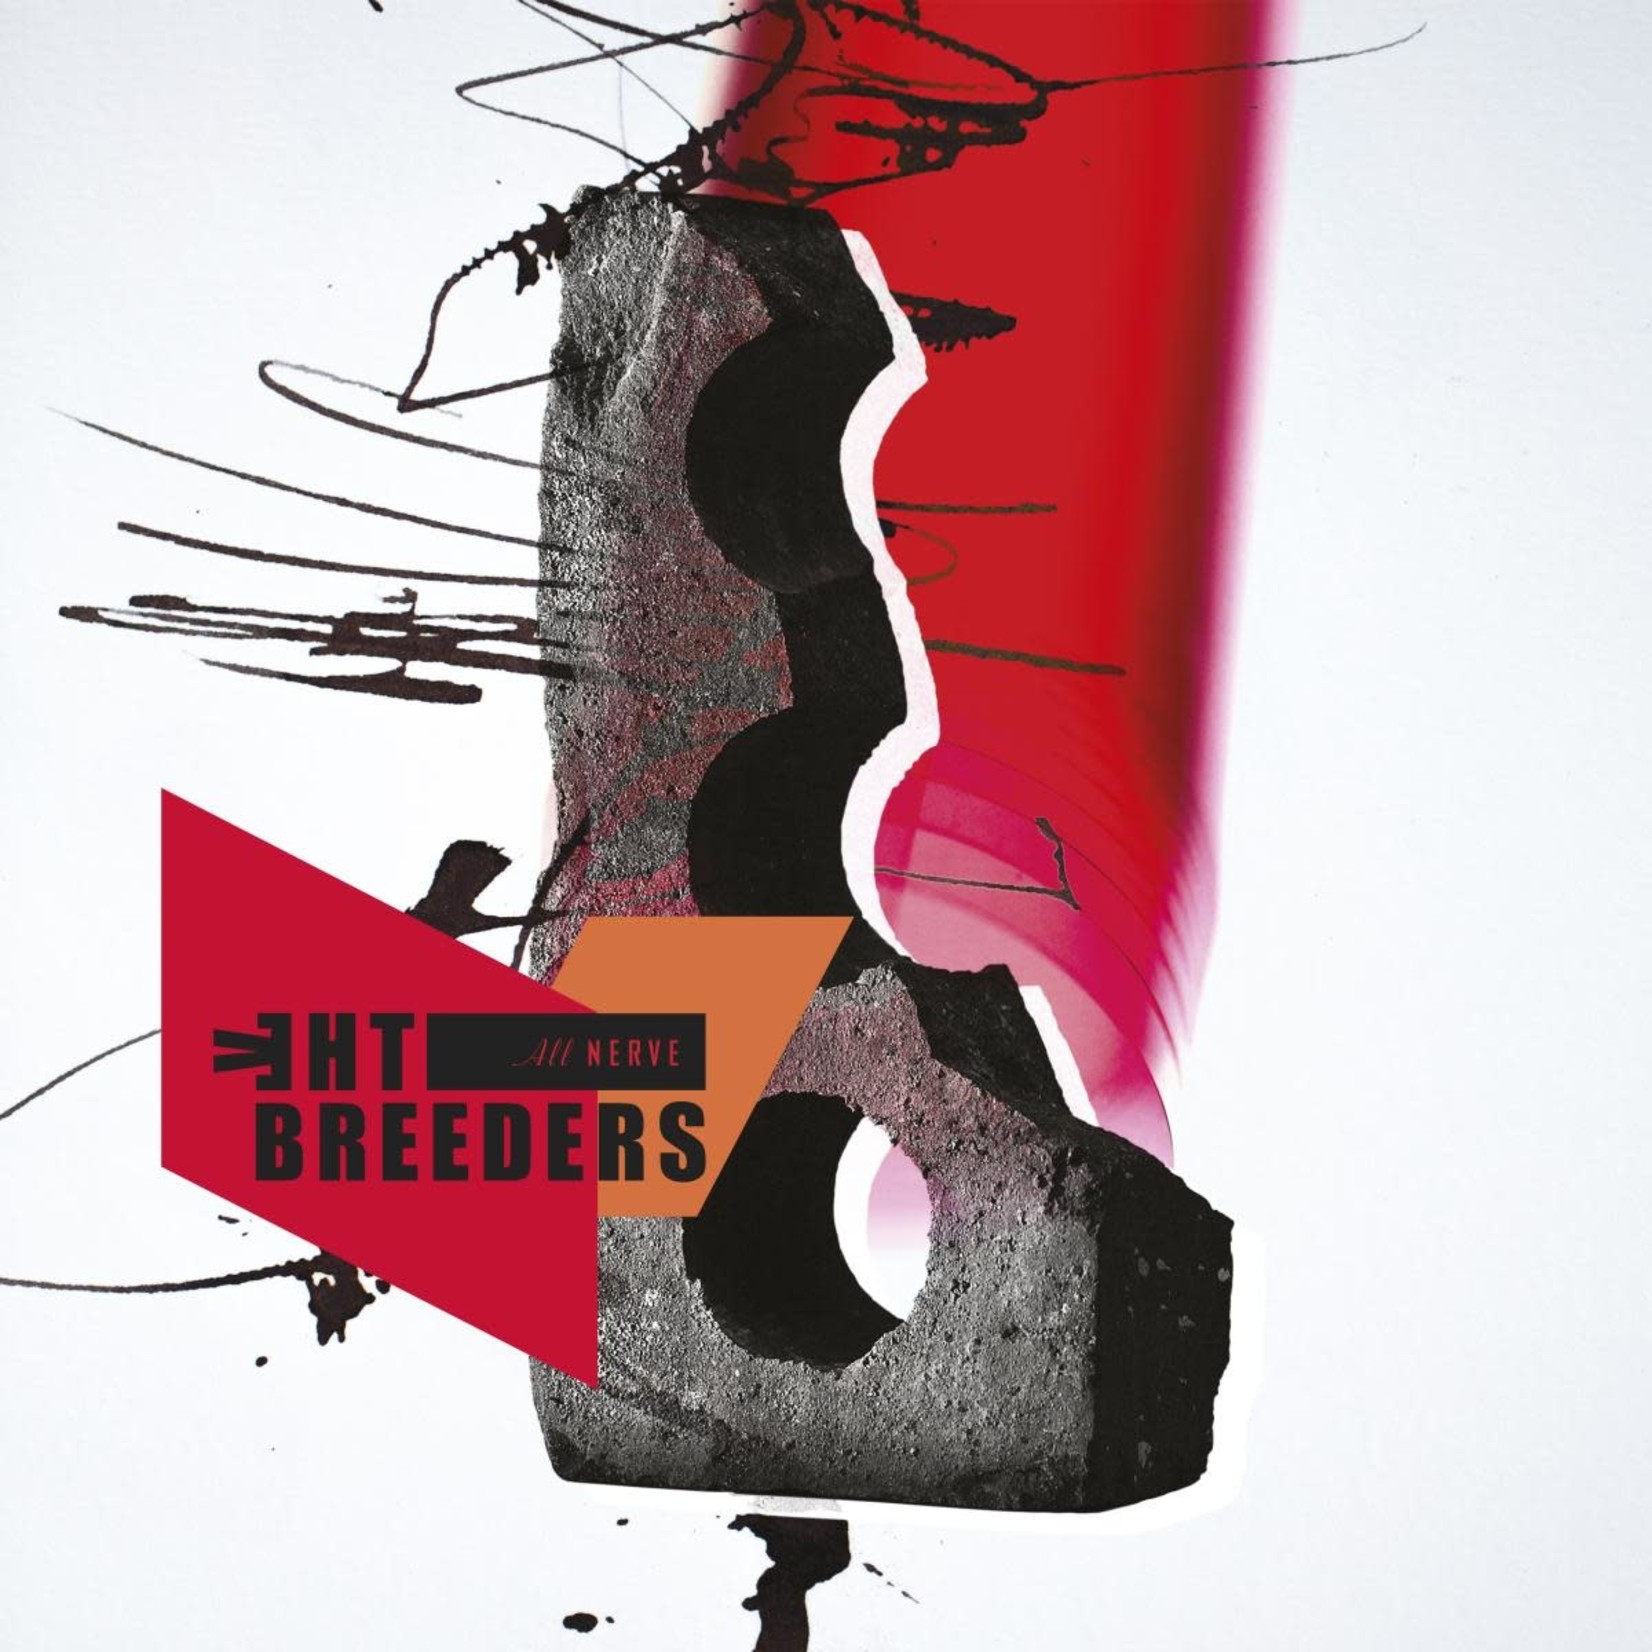 4AD Breeders - All Nerve (LP)